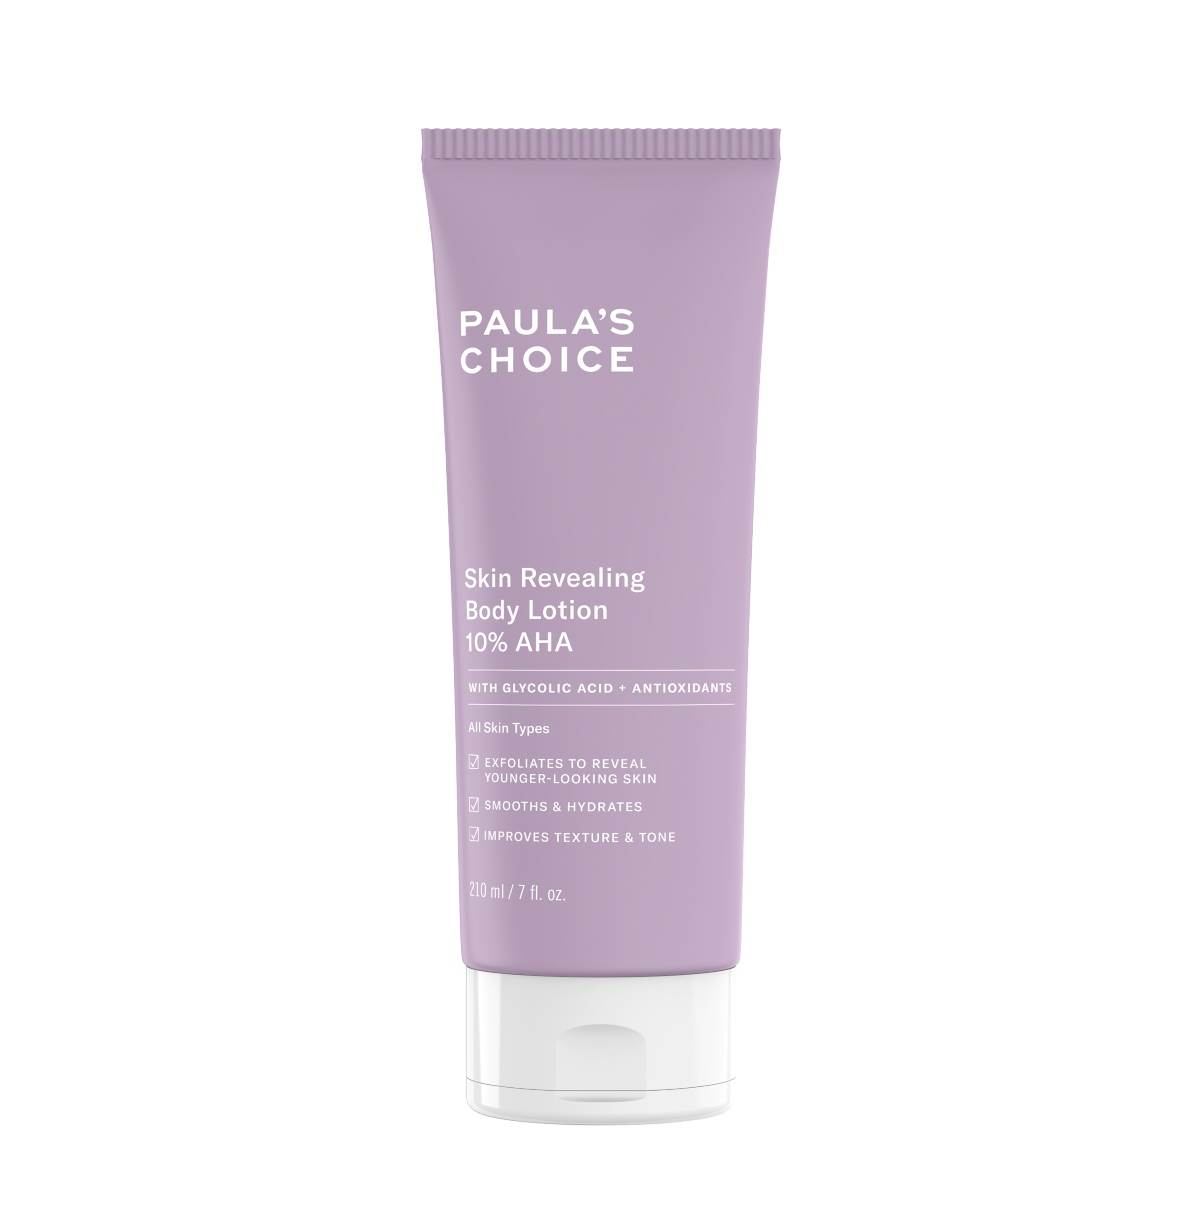 Paula's Choice Skin Revealing Body Lotion 10% AHA.jpg